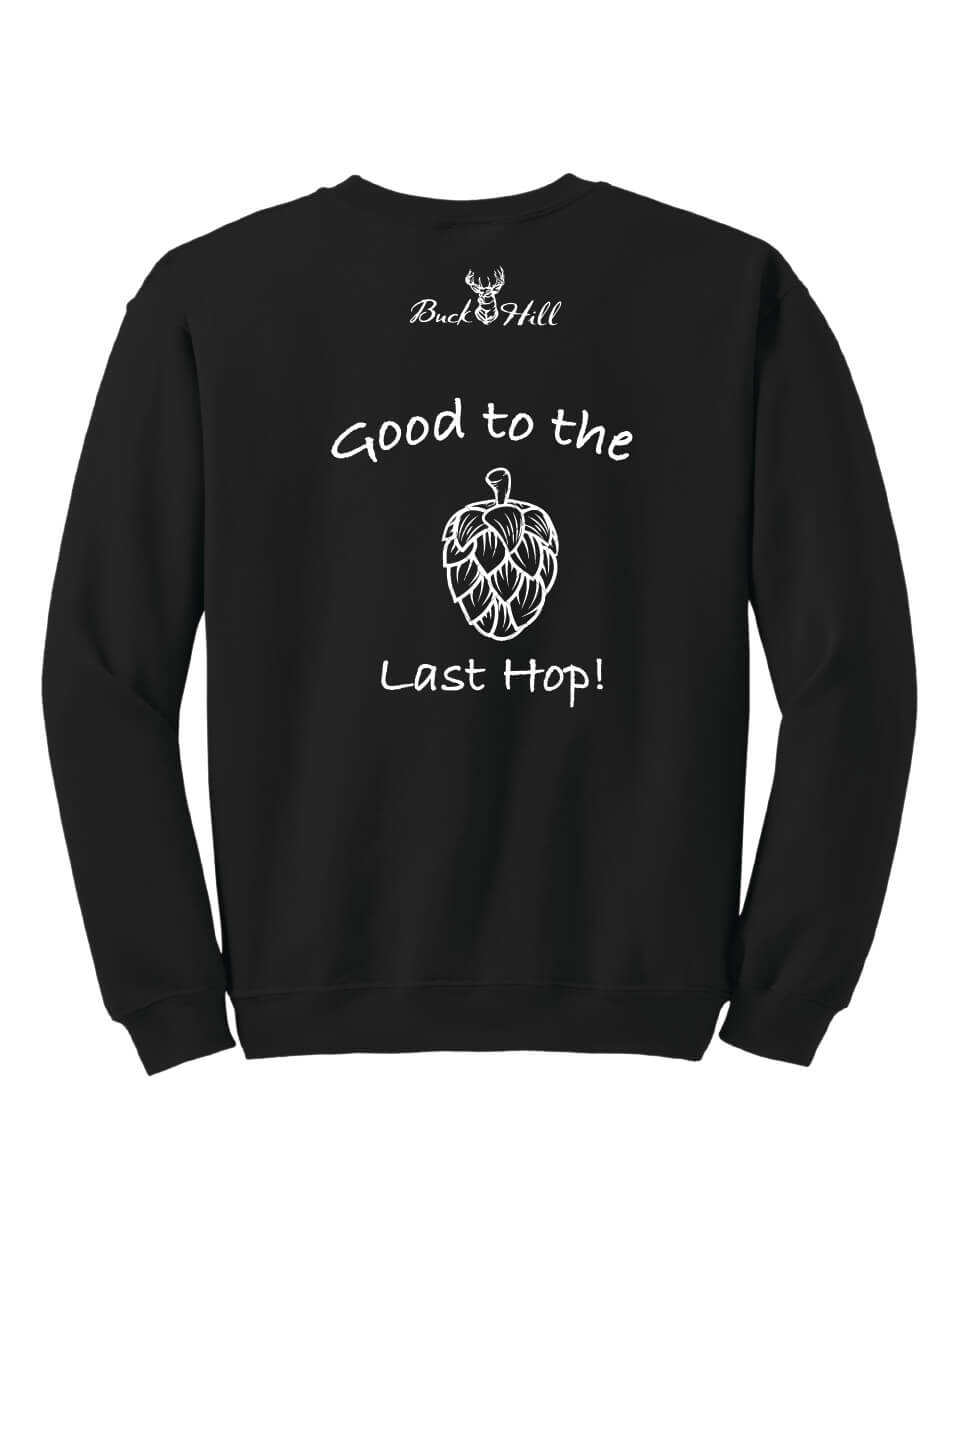 Good to the Last Hop crewneck sweatshirt back